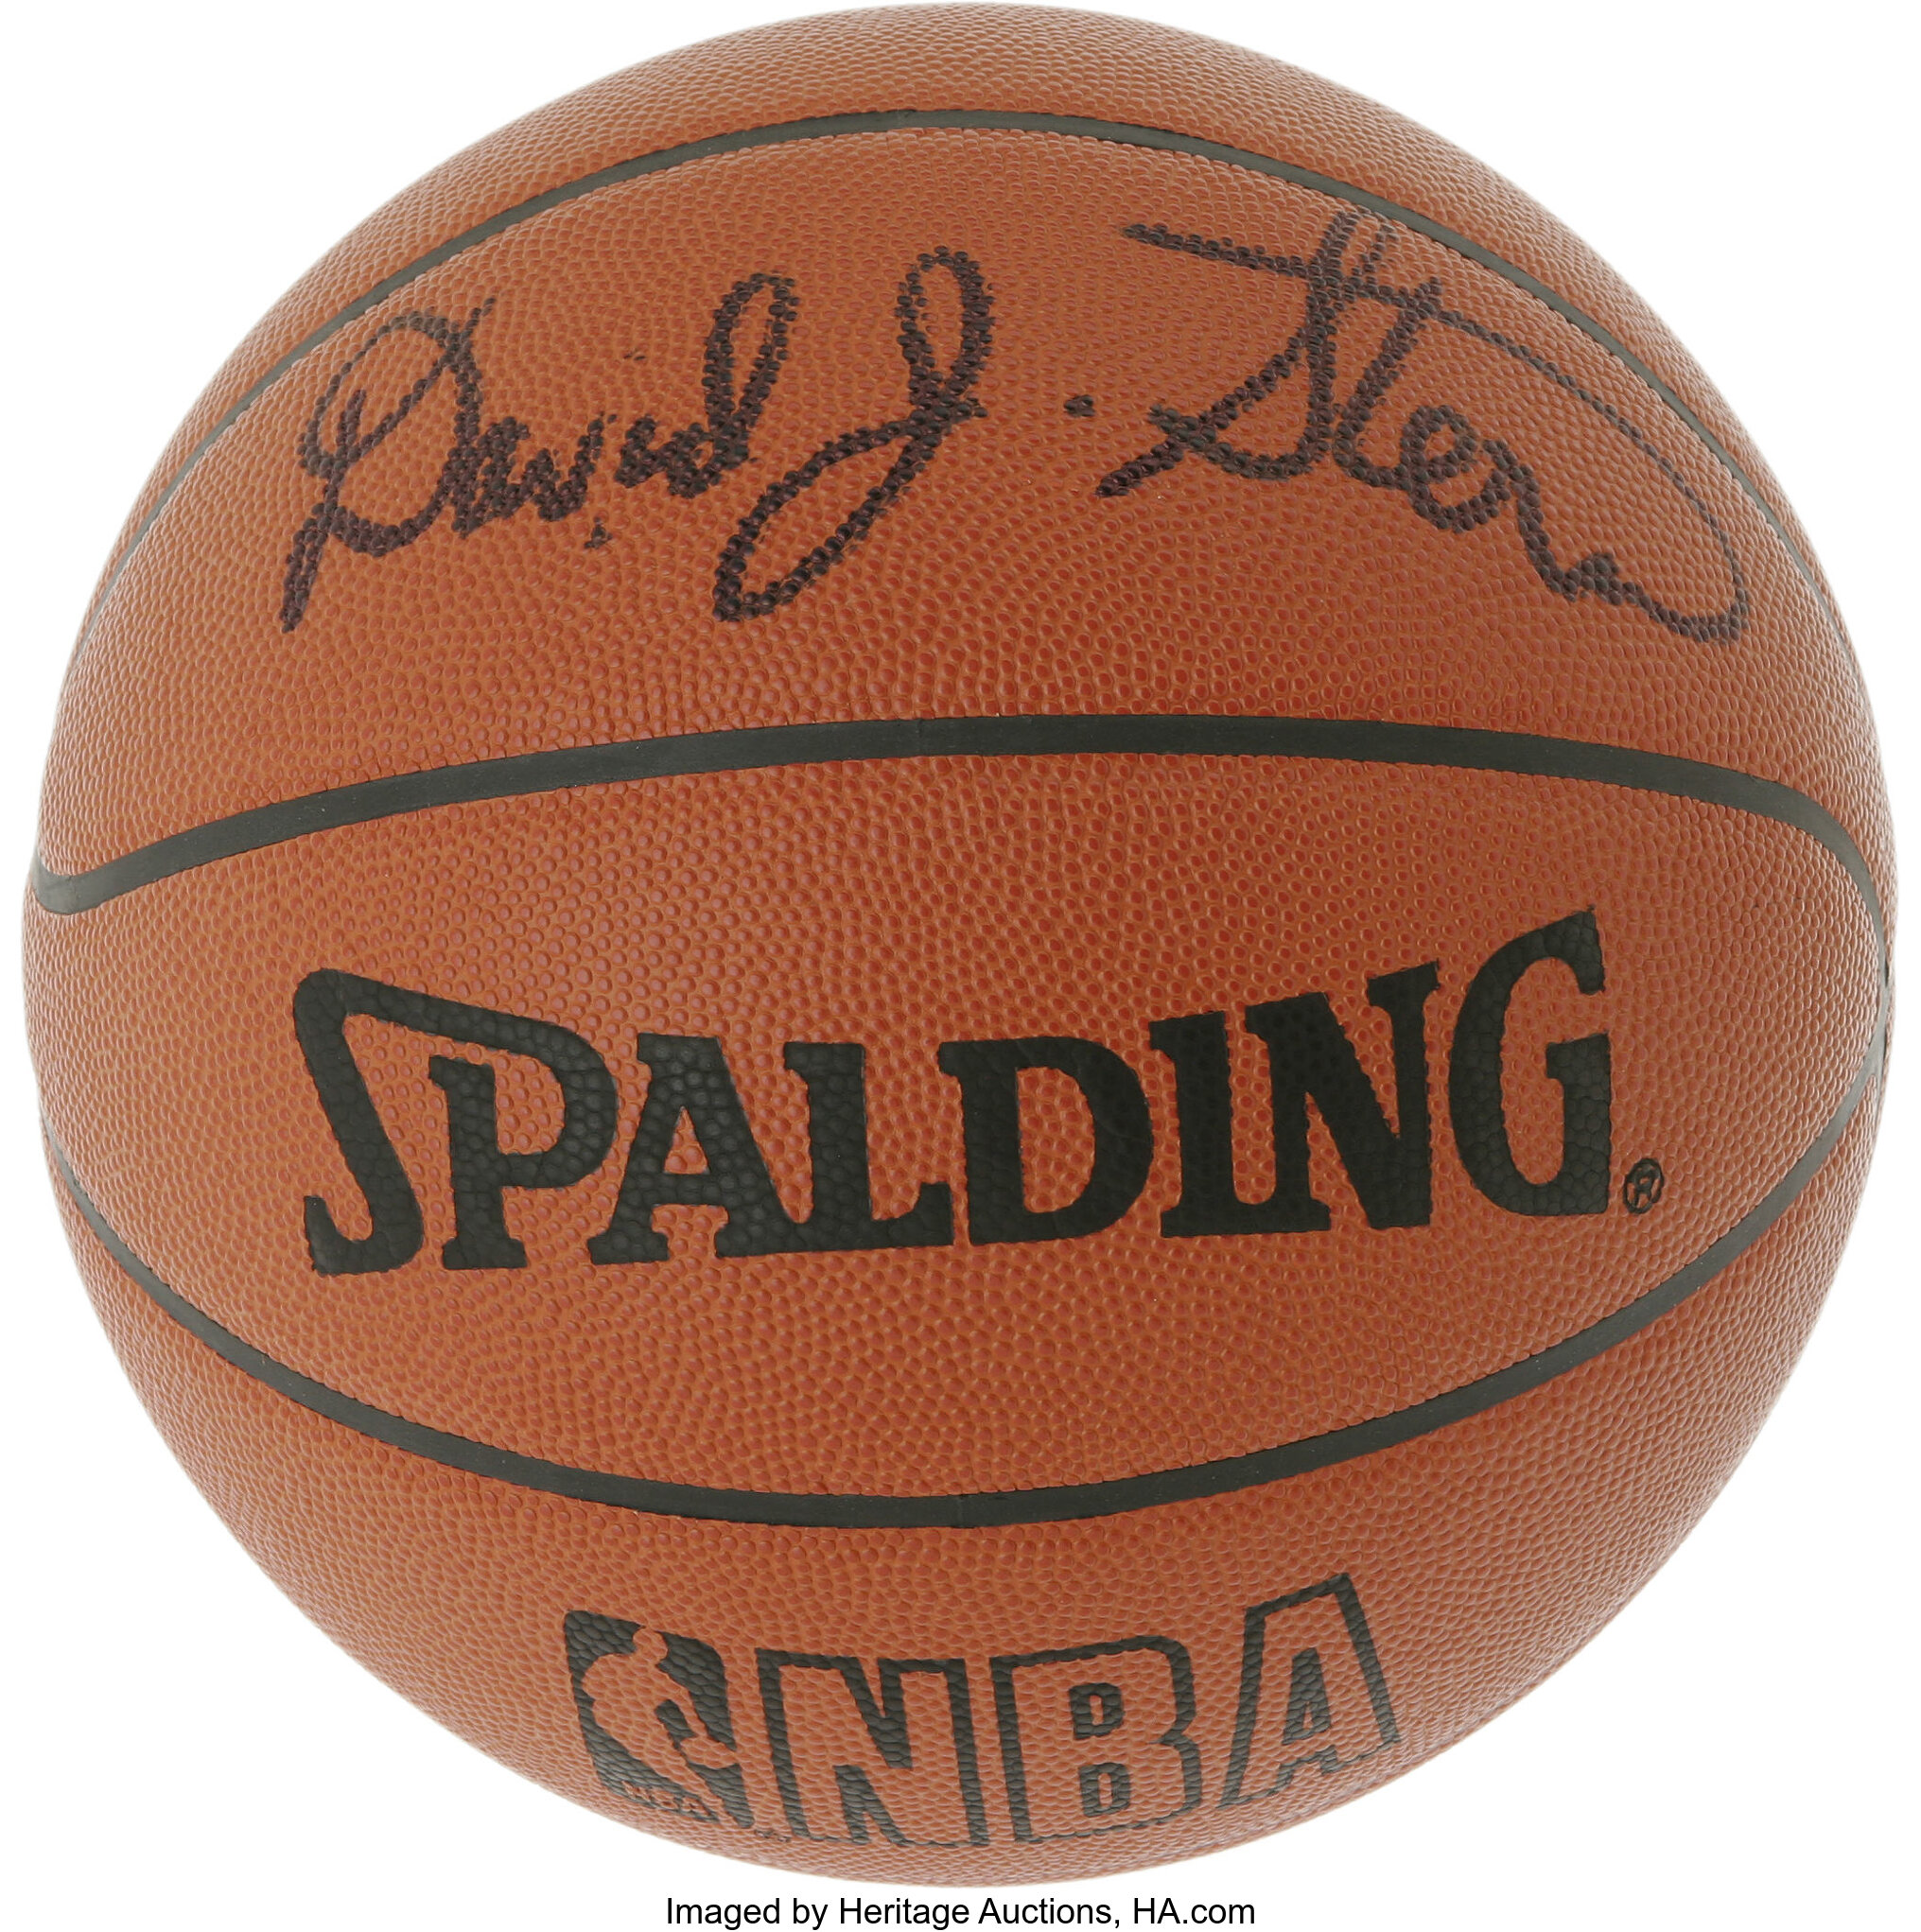 Spalding Ultimate Outdoor Basketball NBA David J. Stern Official